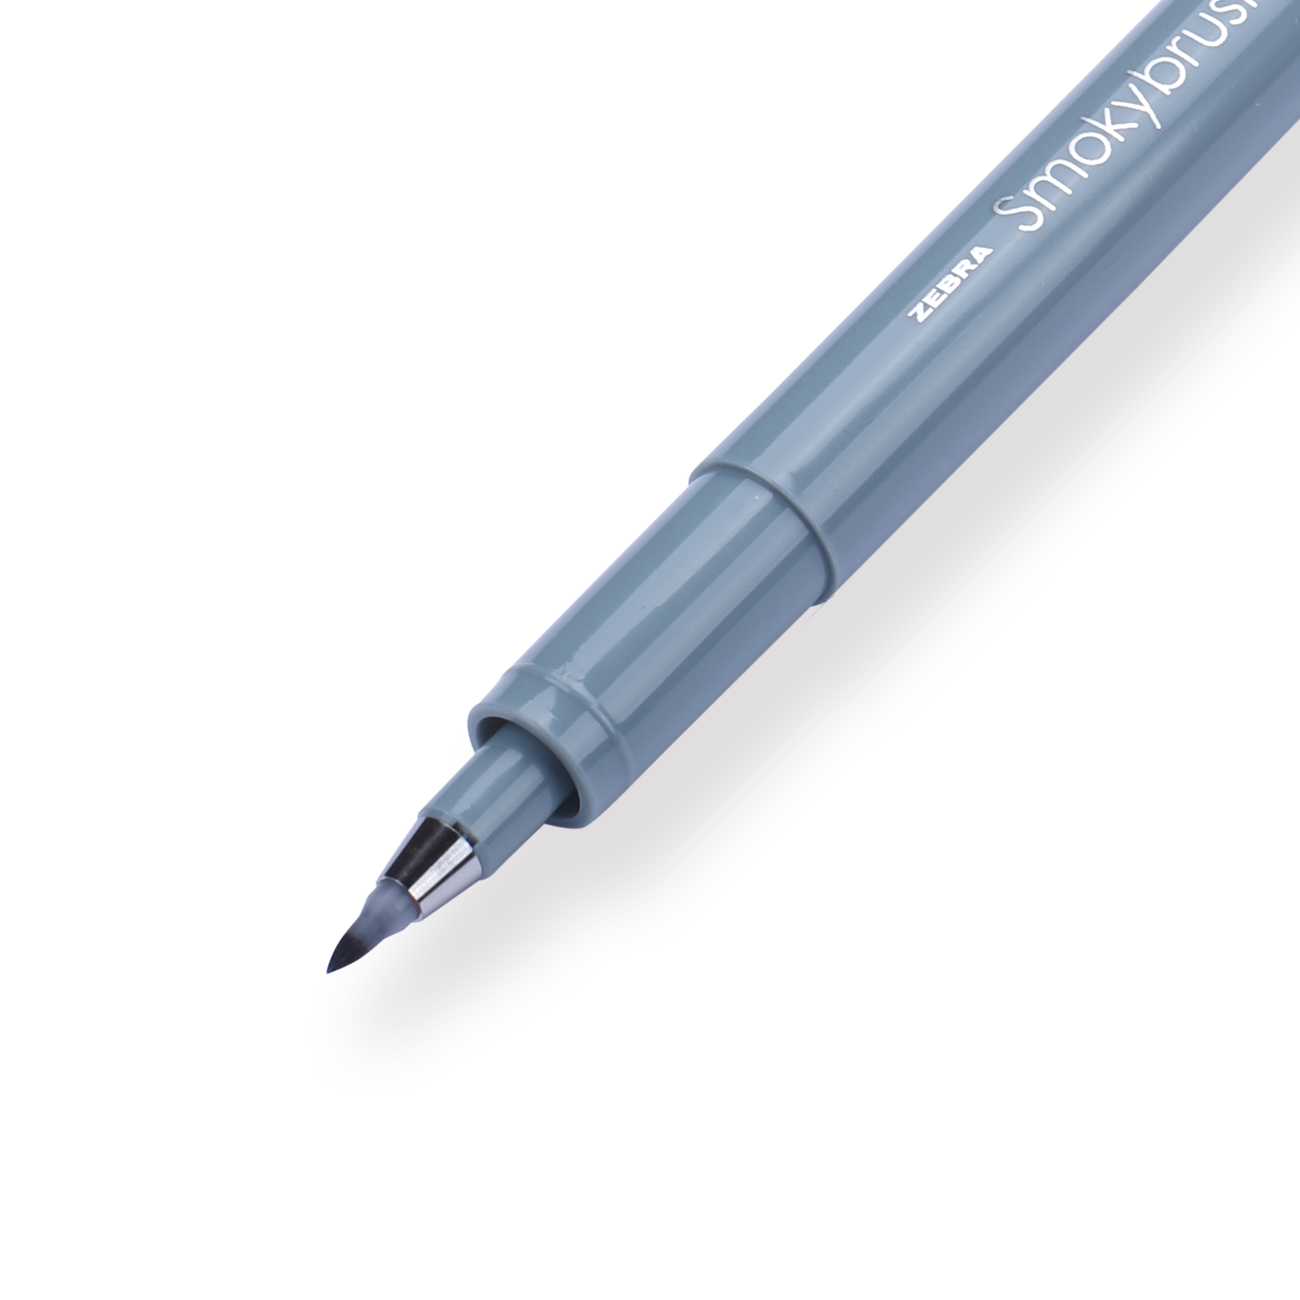 Zebra Color Brush Pen - Gray